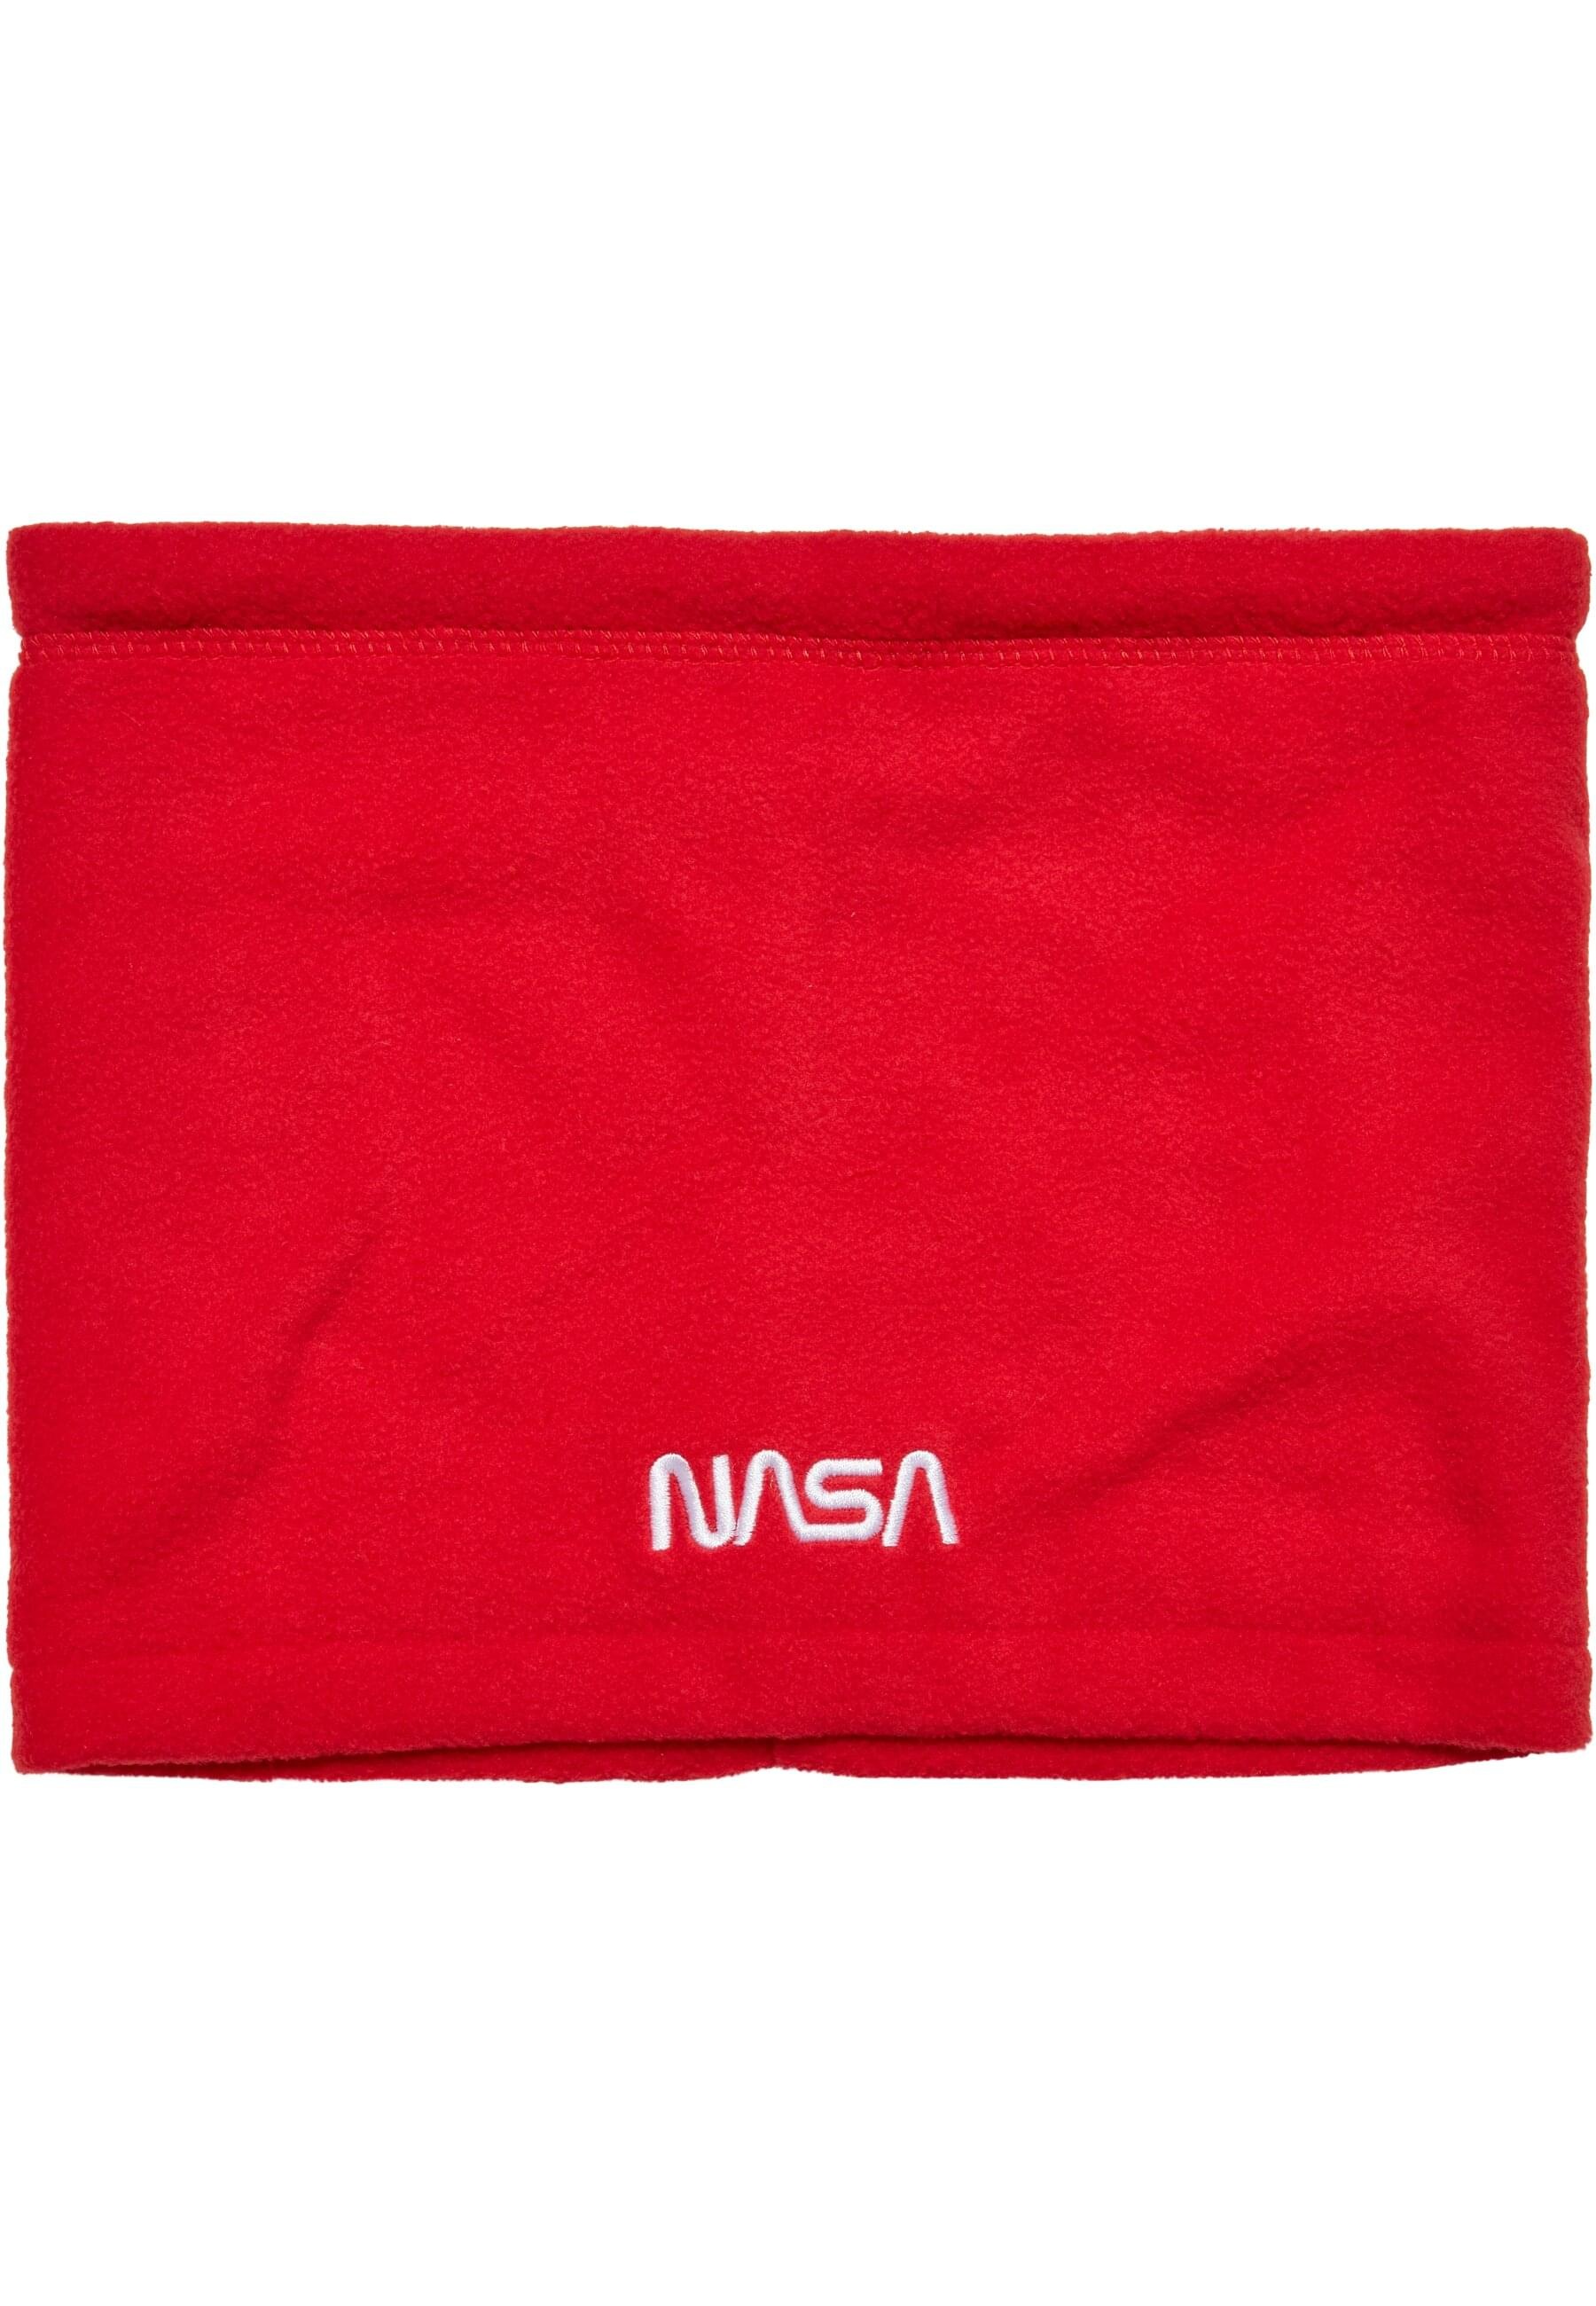 MisterTee Baumwollhandschuhe »MisterTee Unisex NASA Fleece Set«